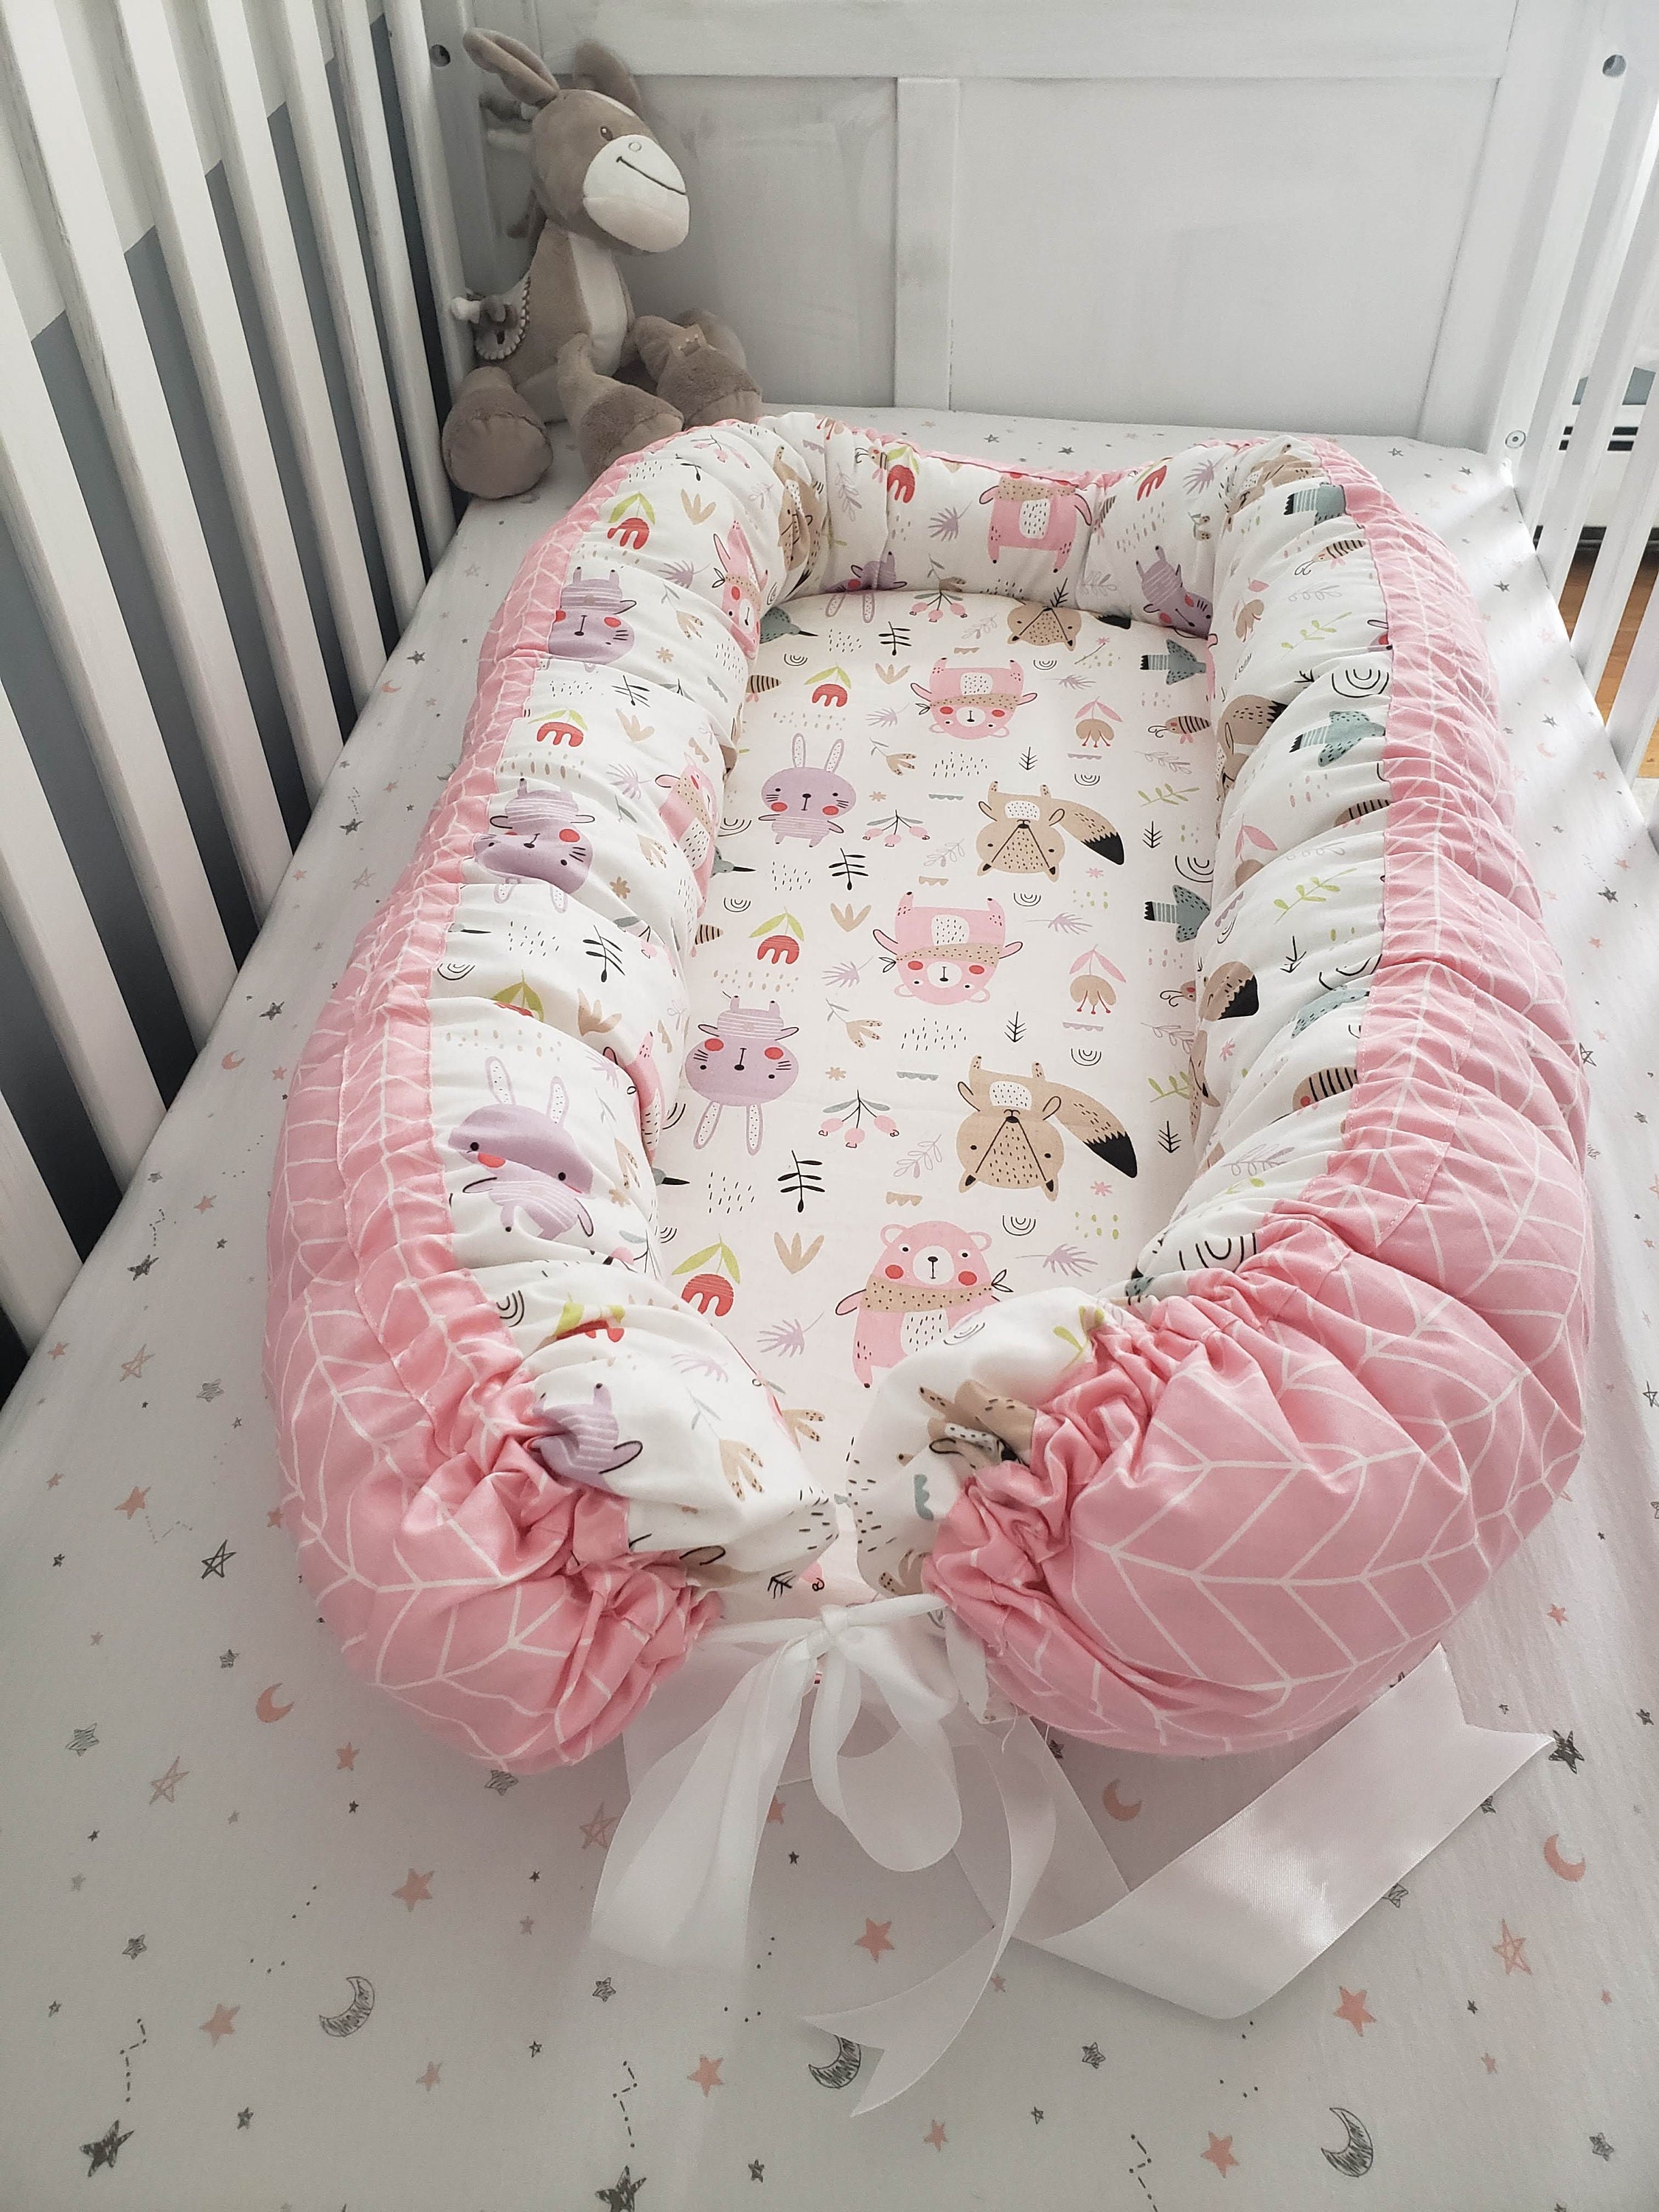 Baby Nest Bed | Etsy